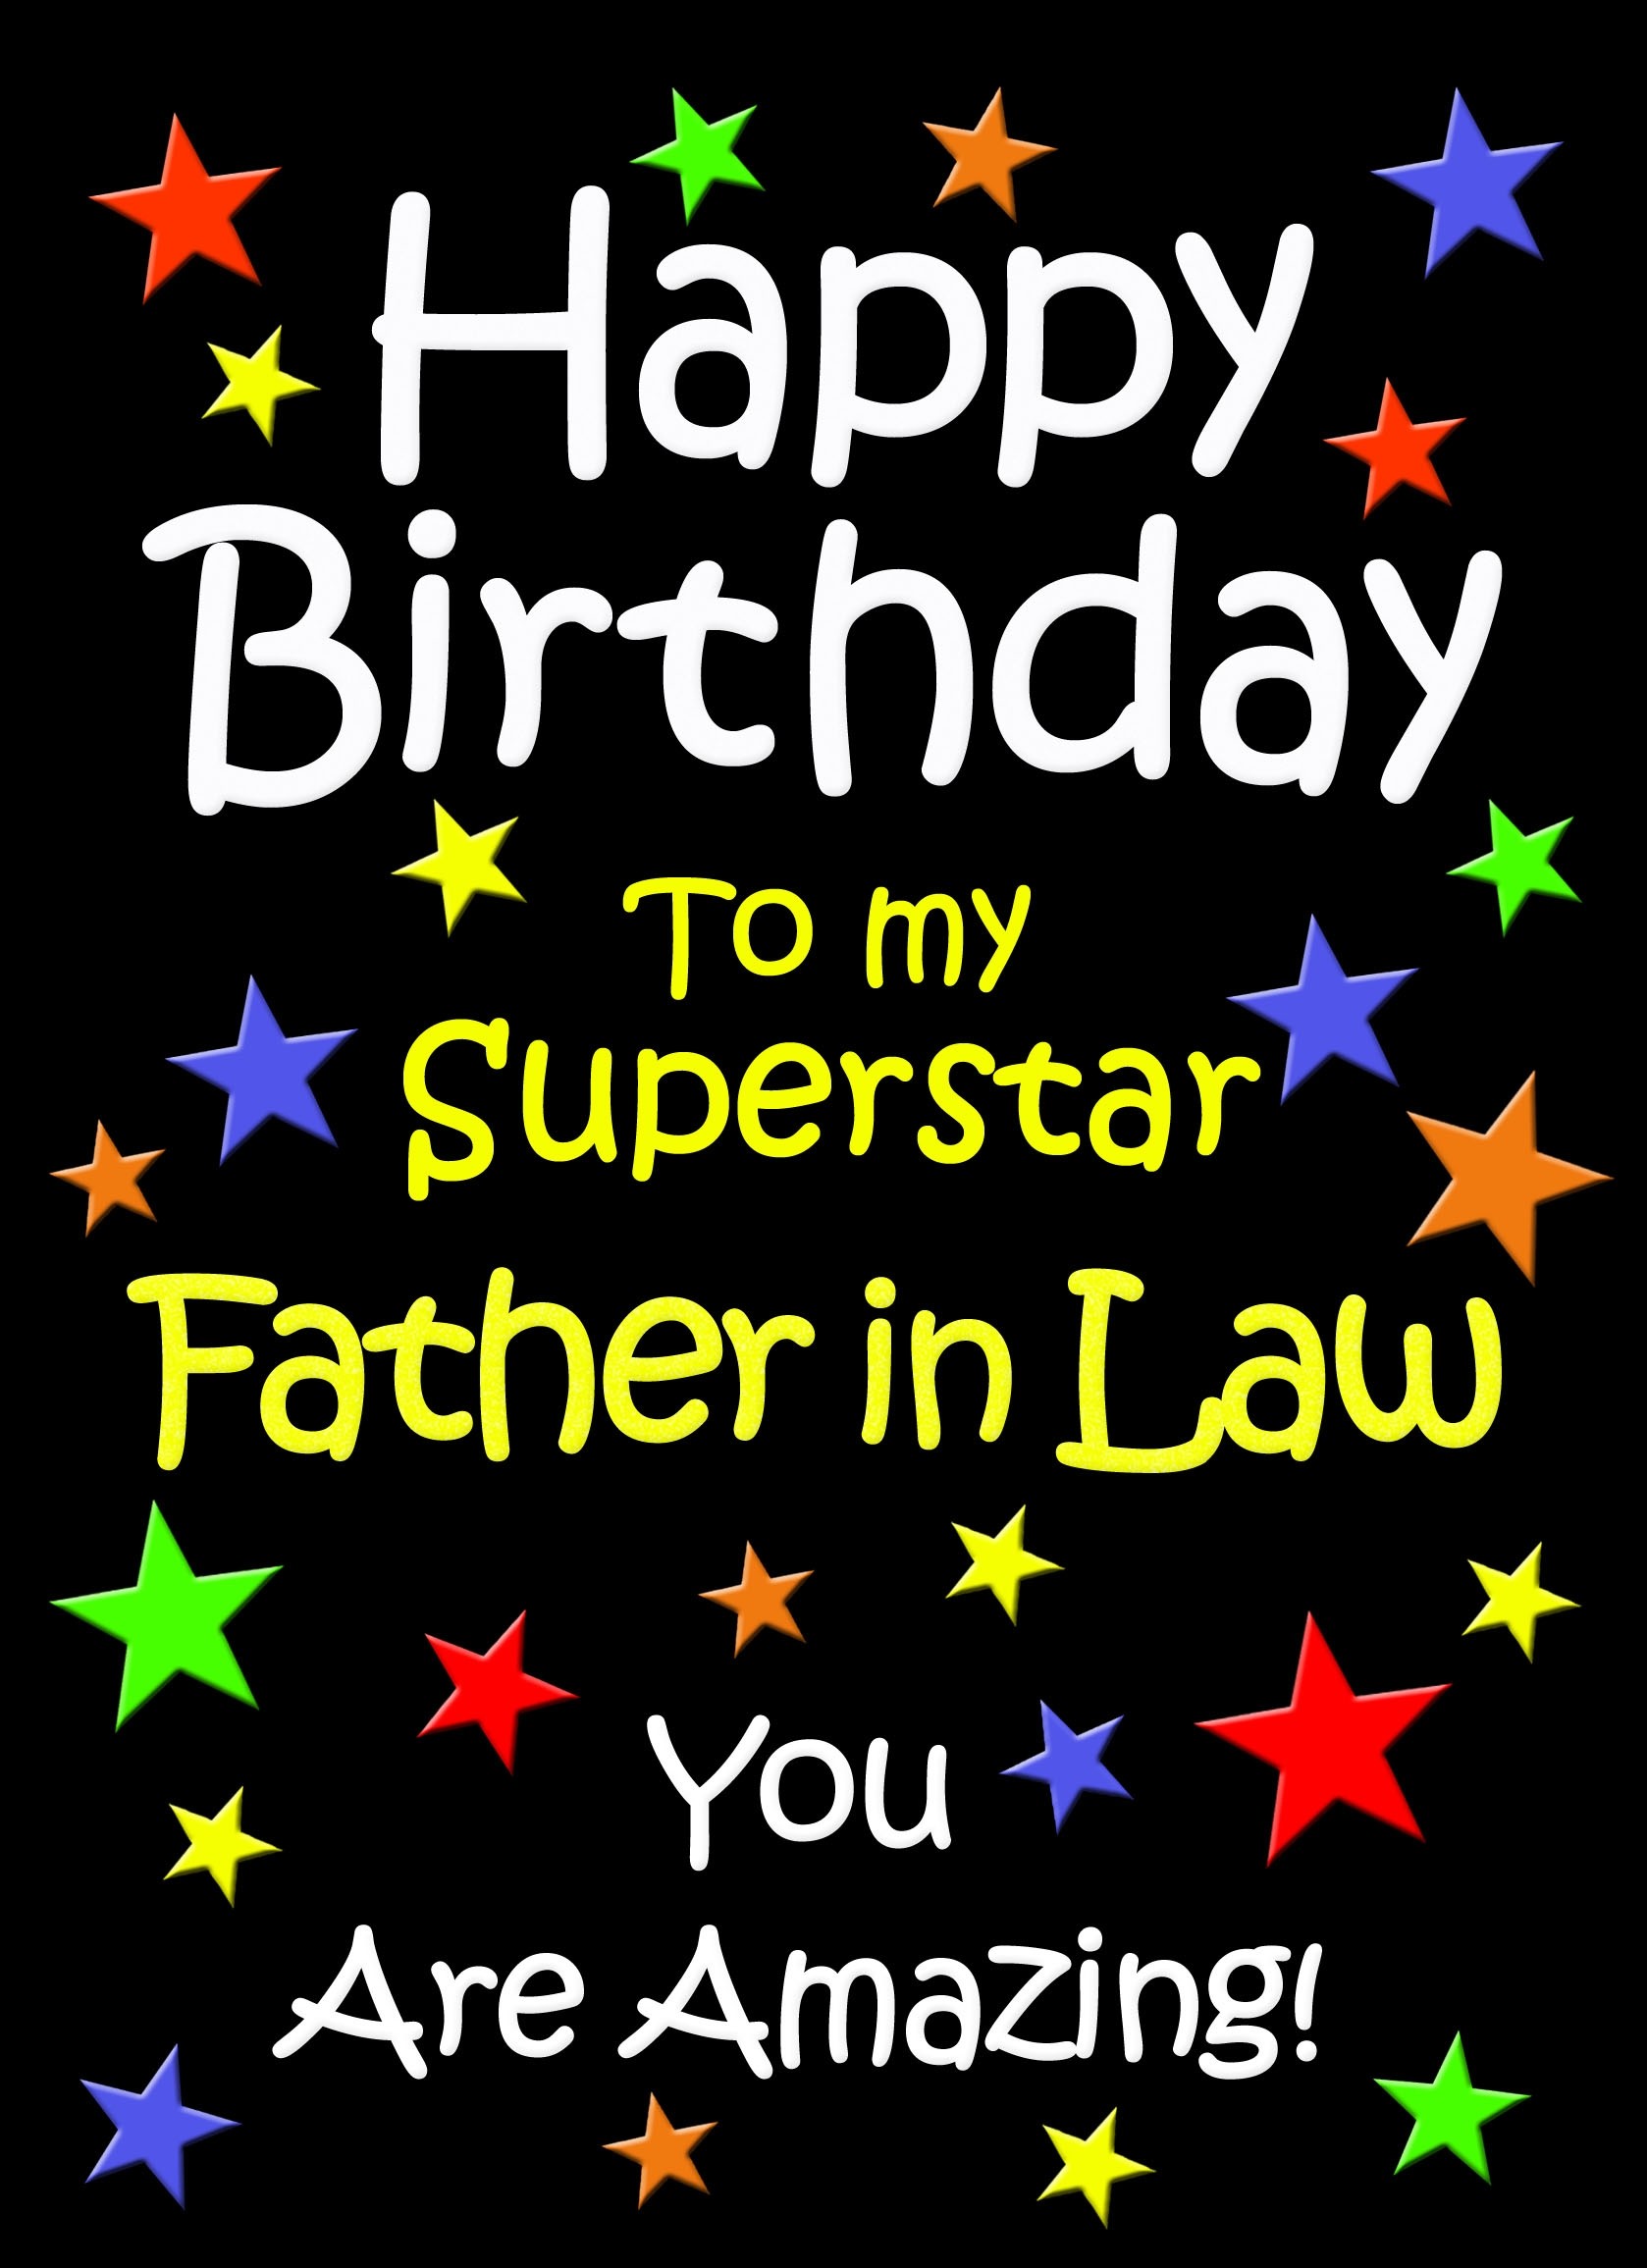 Father in Law Birthday Card (Black)